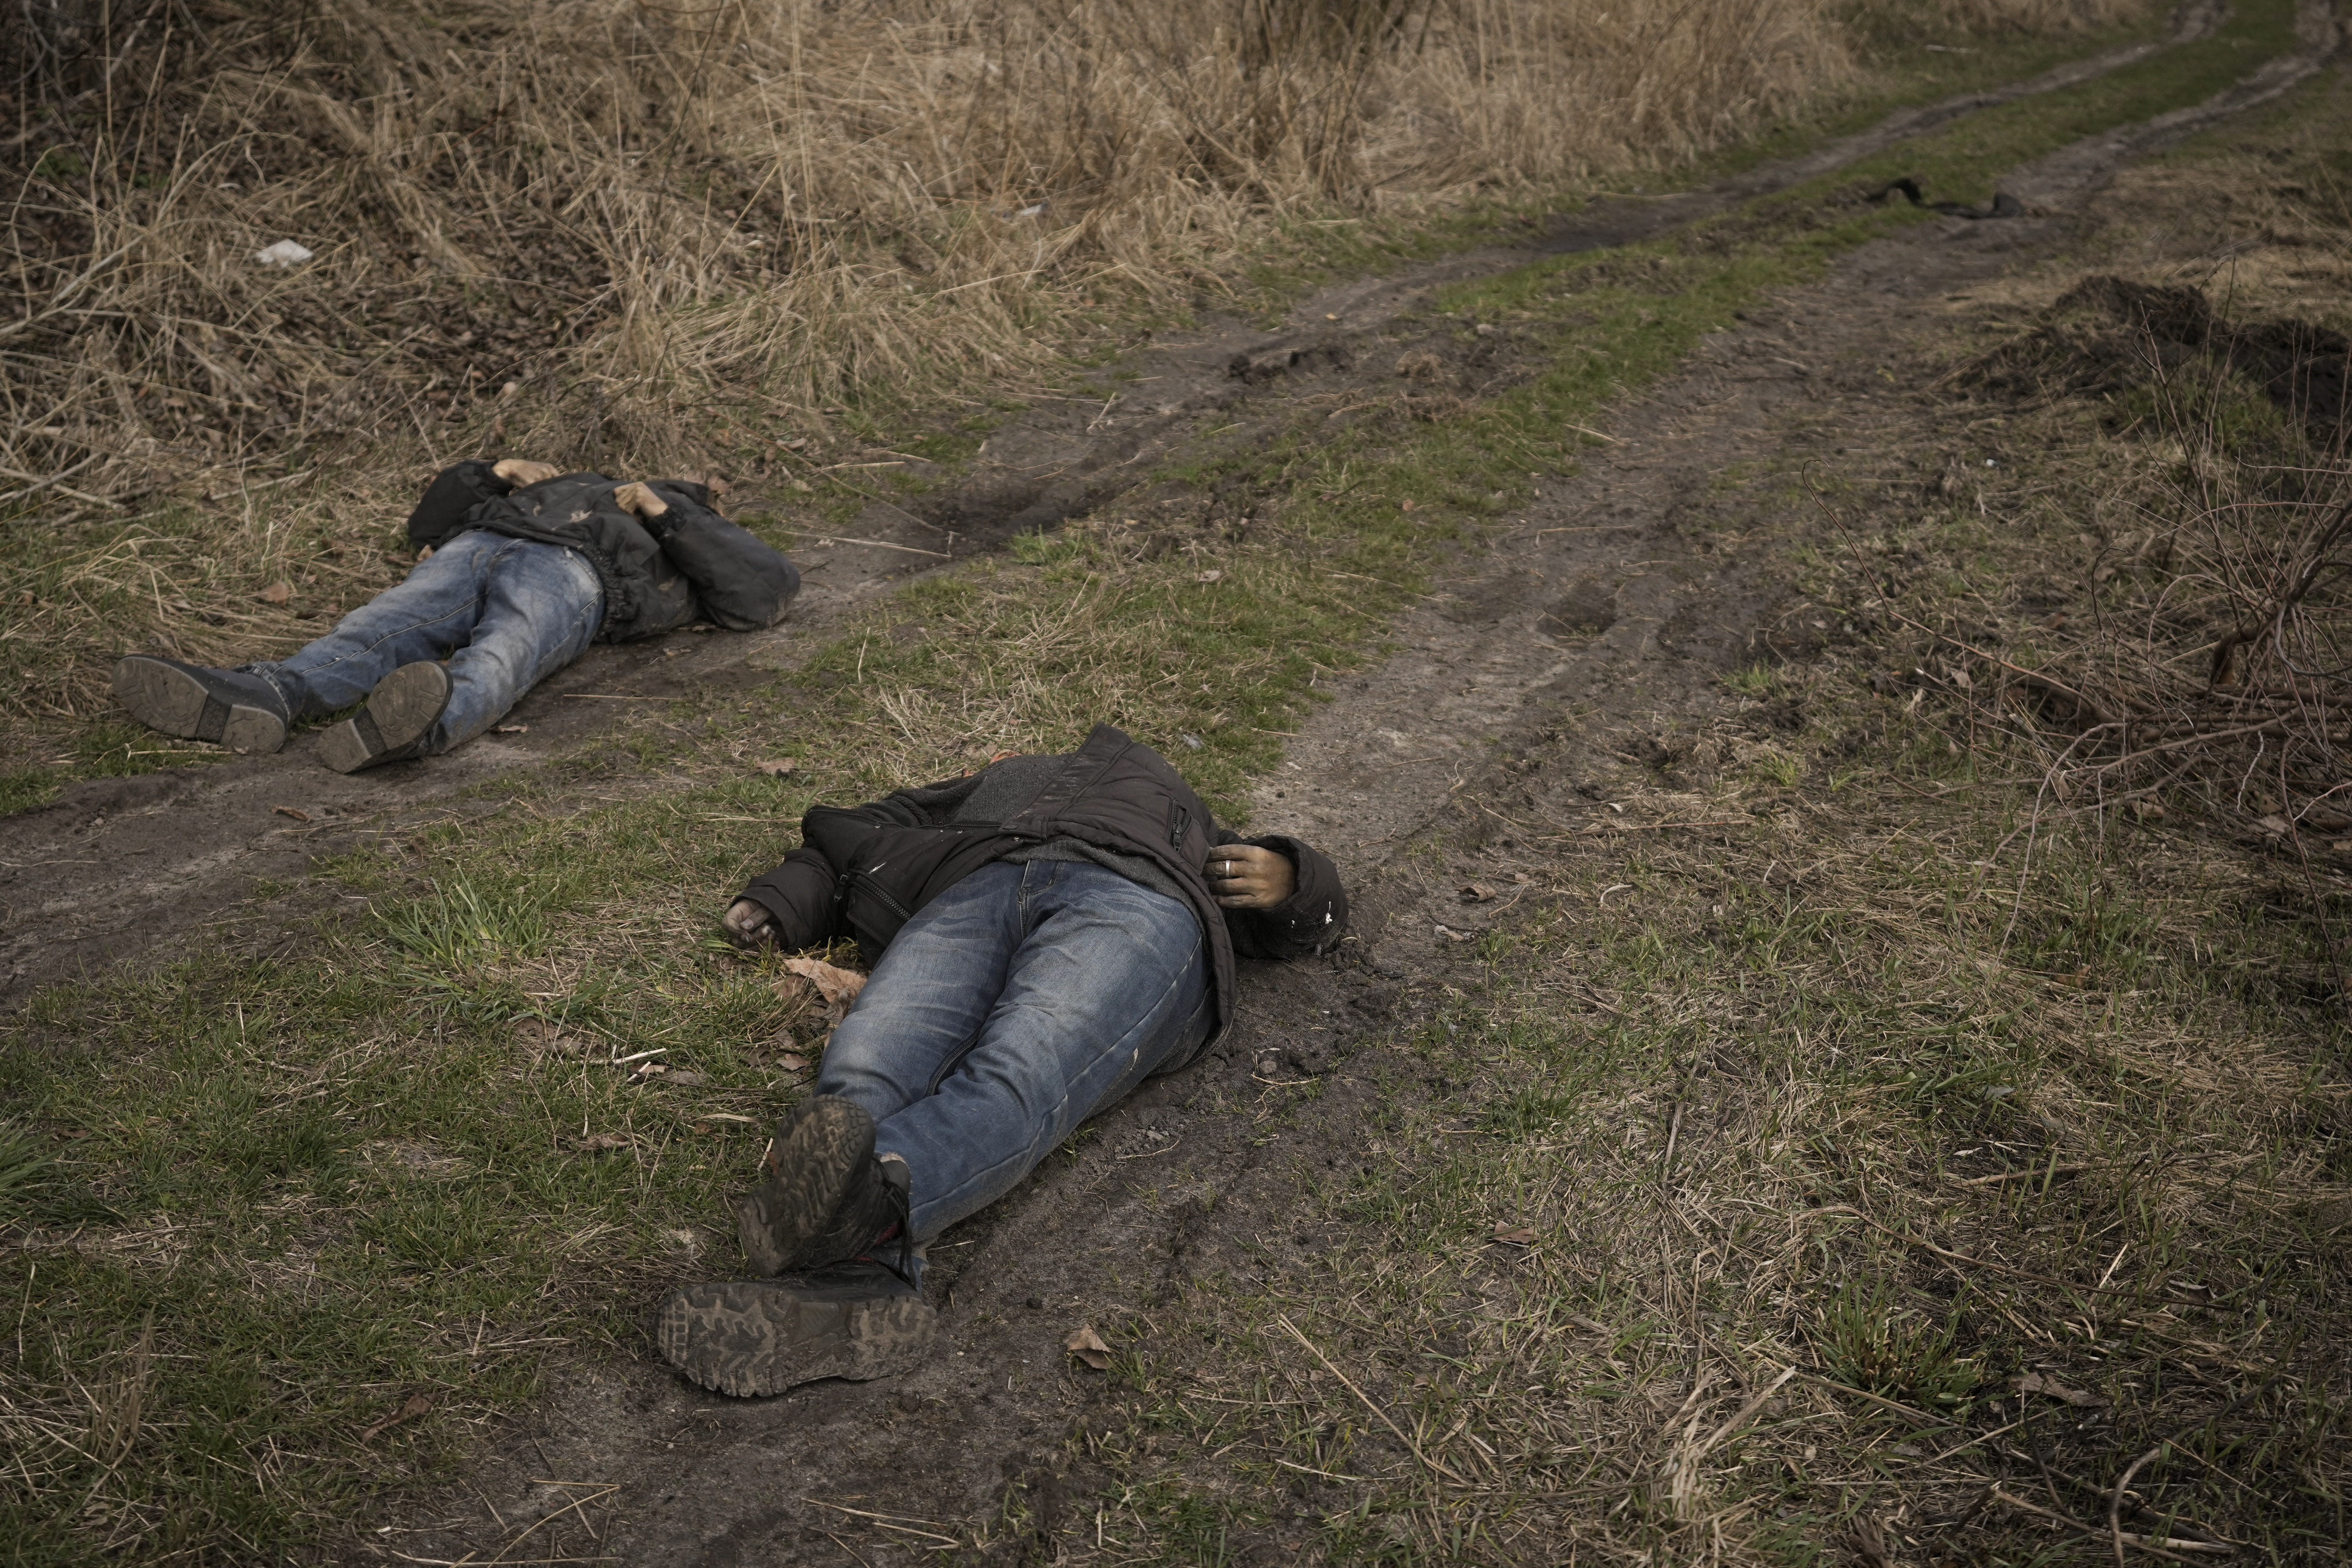 Bodies of two civilians killed in Pucha (AP / Vadim Ghirda)